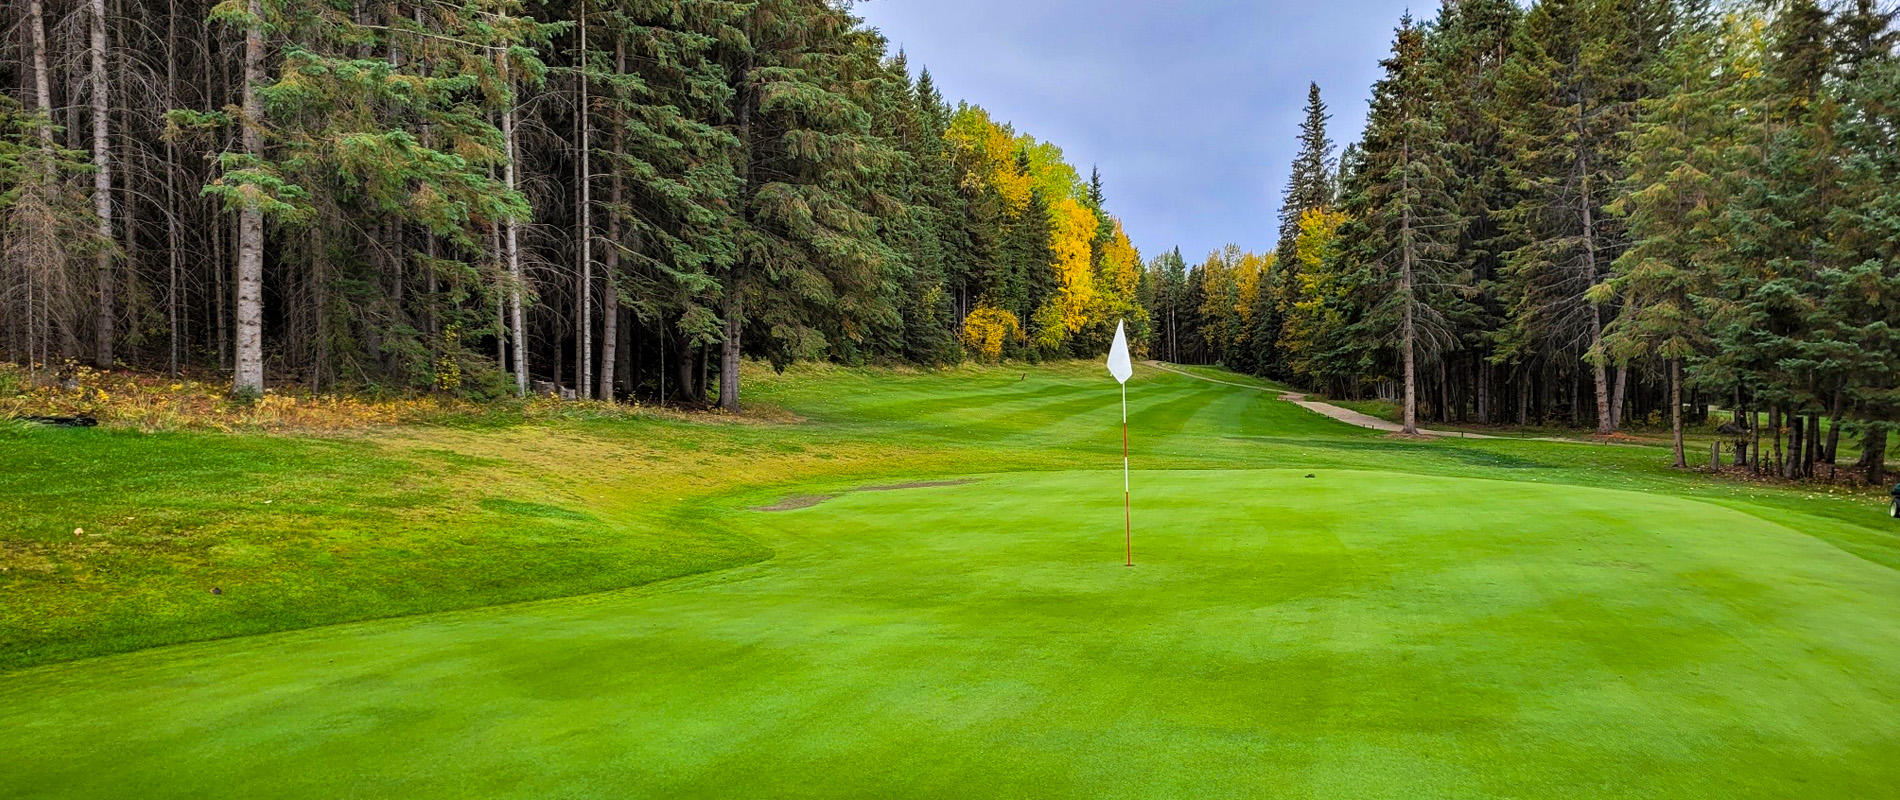 Golf Course Dress Code and Golf Style - Deer Creek Golf Club